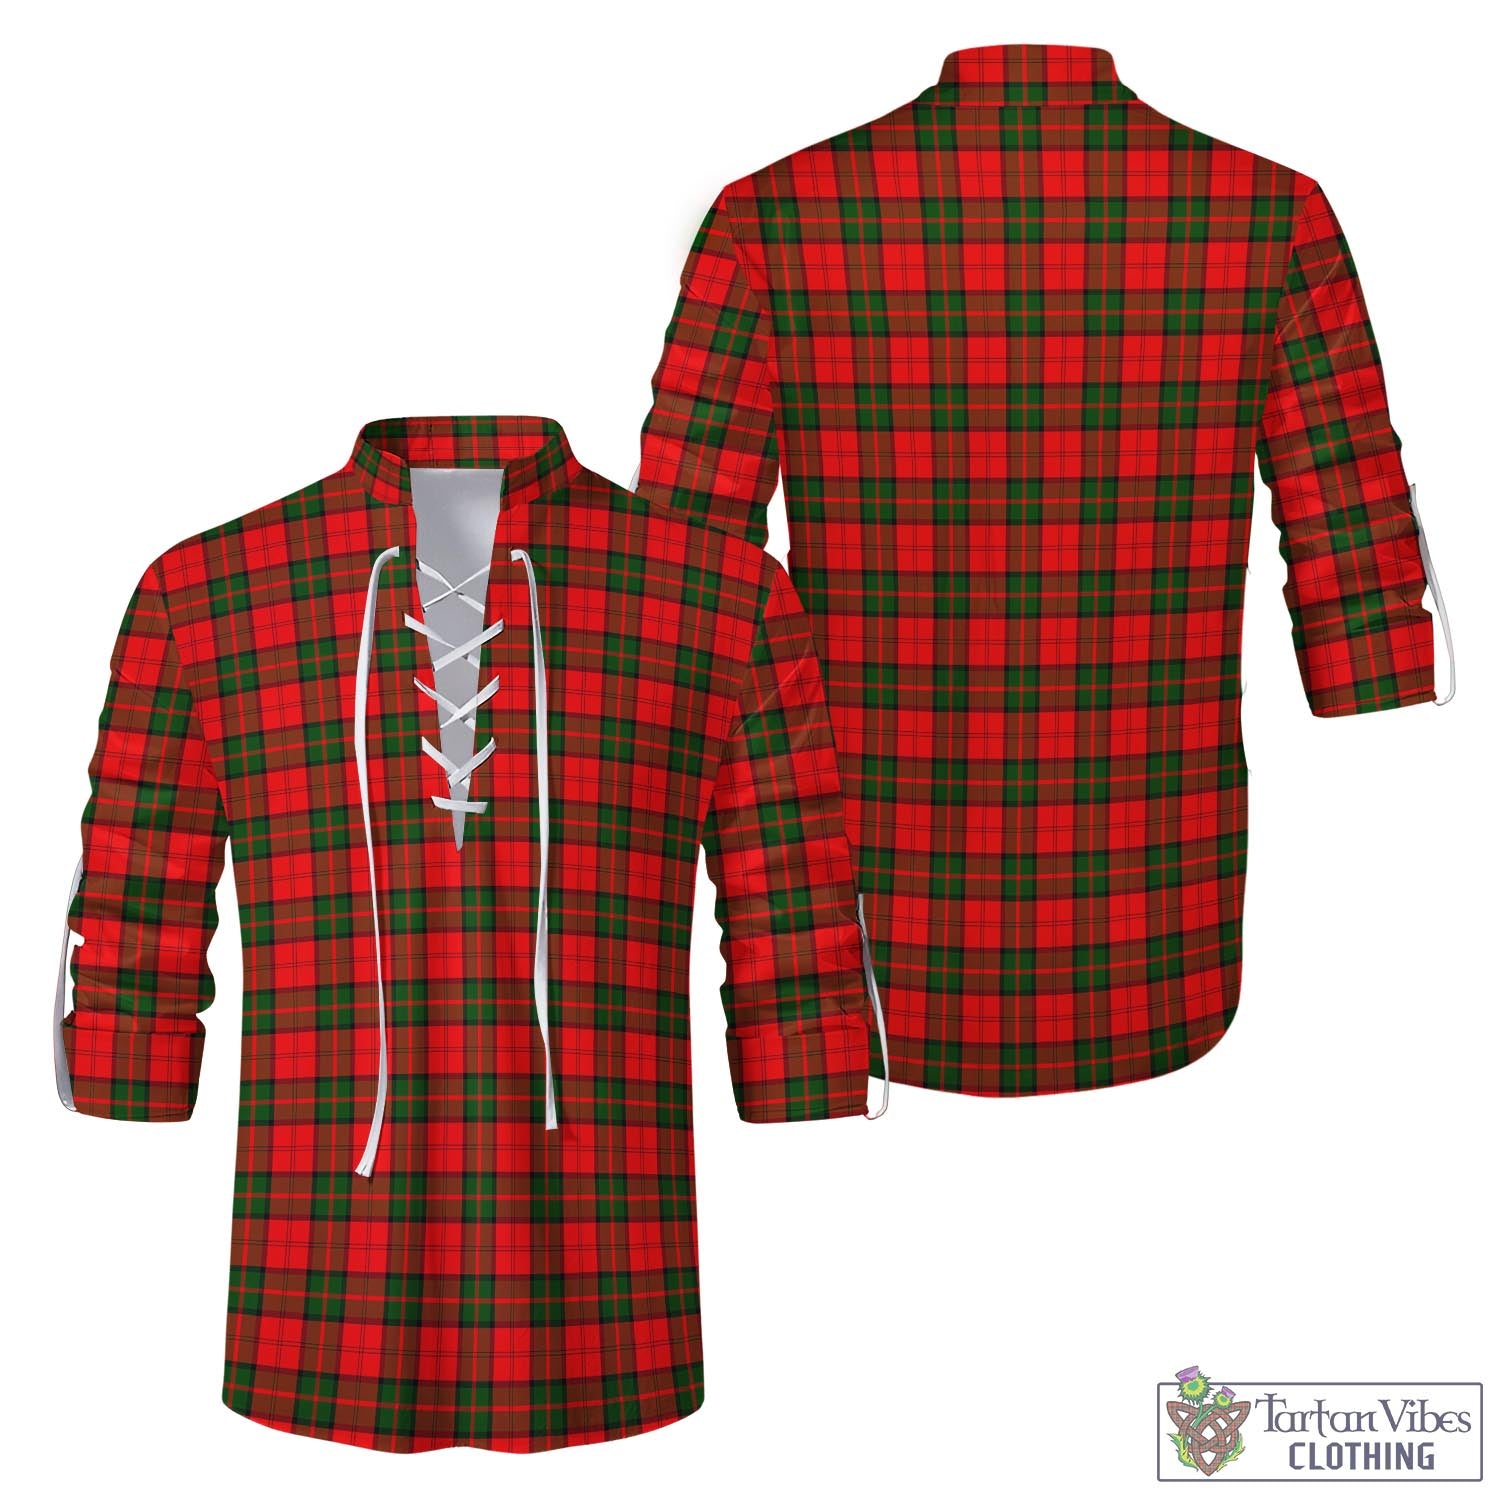 Tartan Vibes Clothing Dunbar Modern Tartan Men's Scottish Traditional Jacobite Ghillie Kilt Shirt